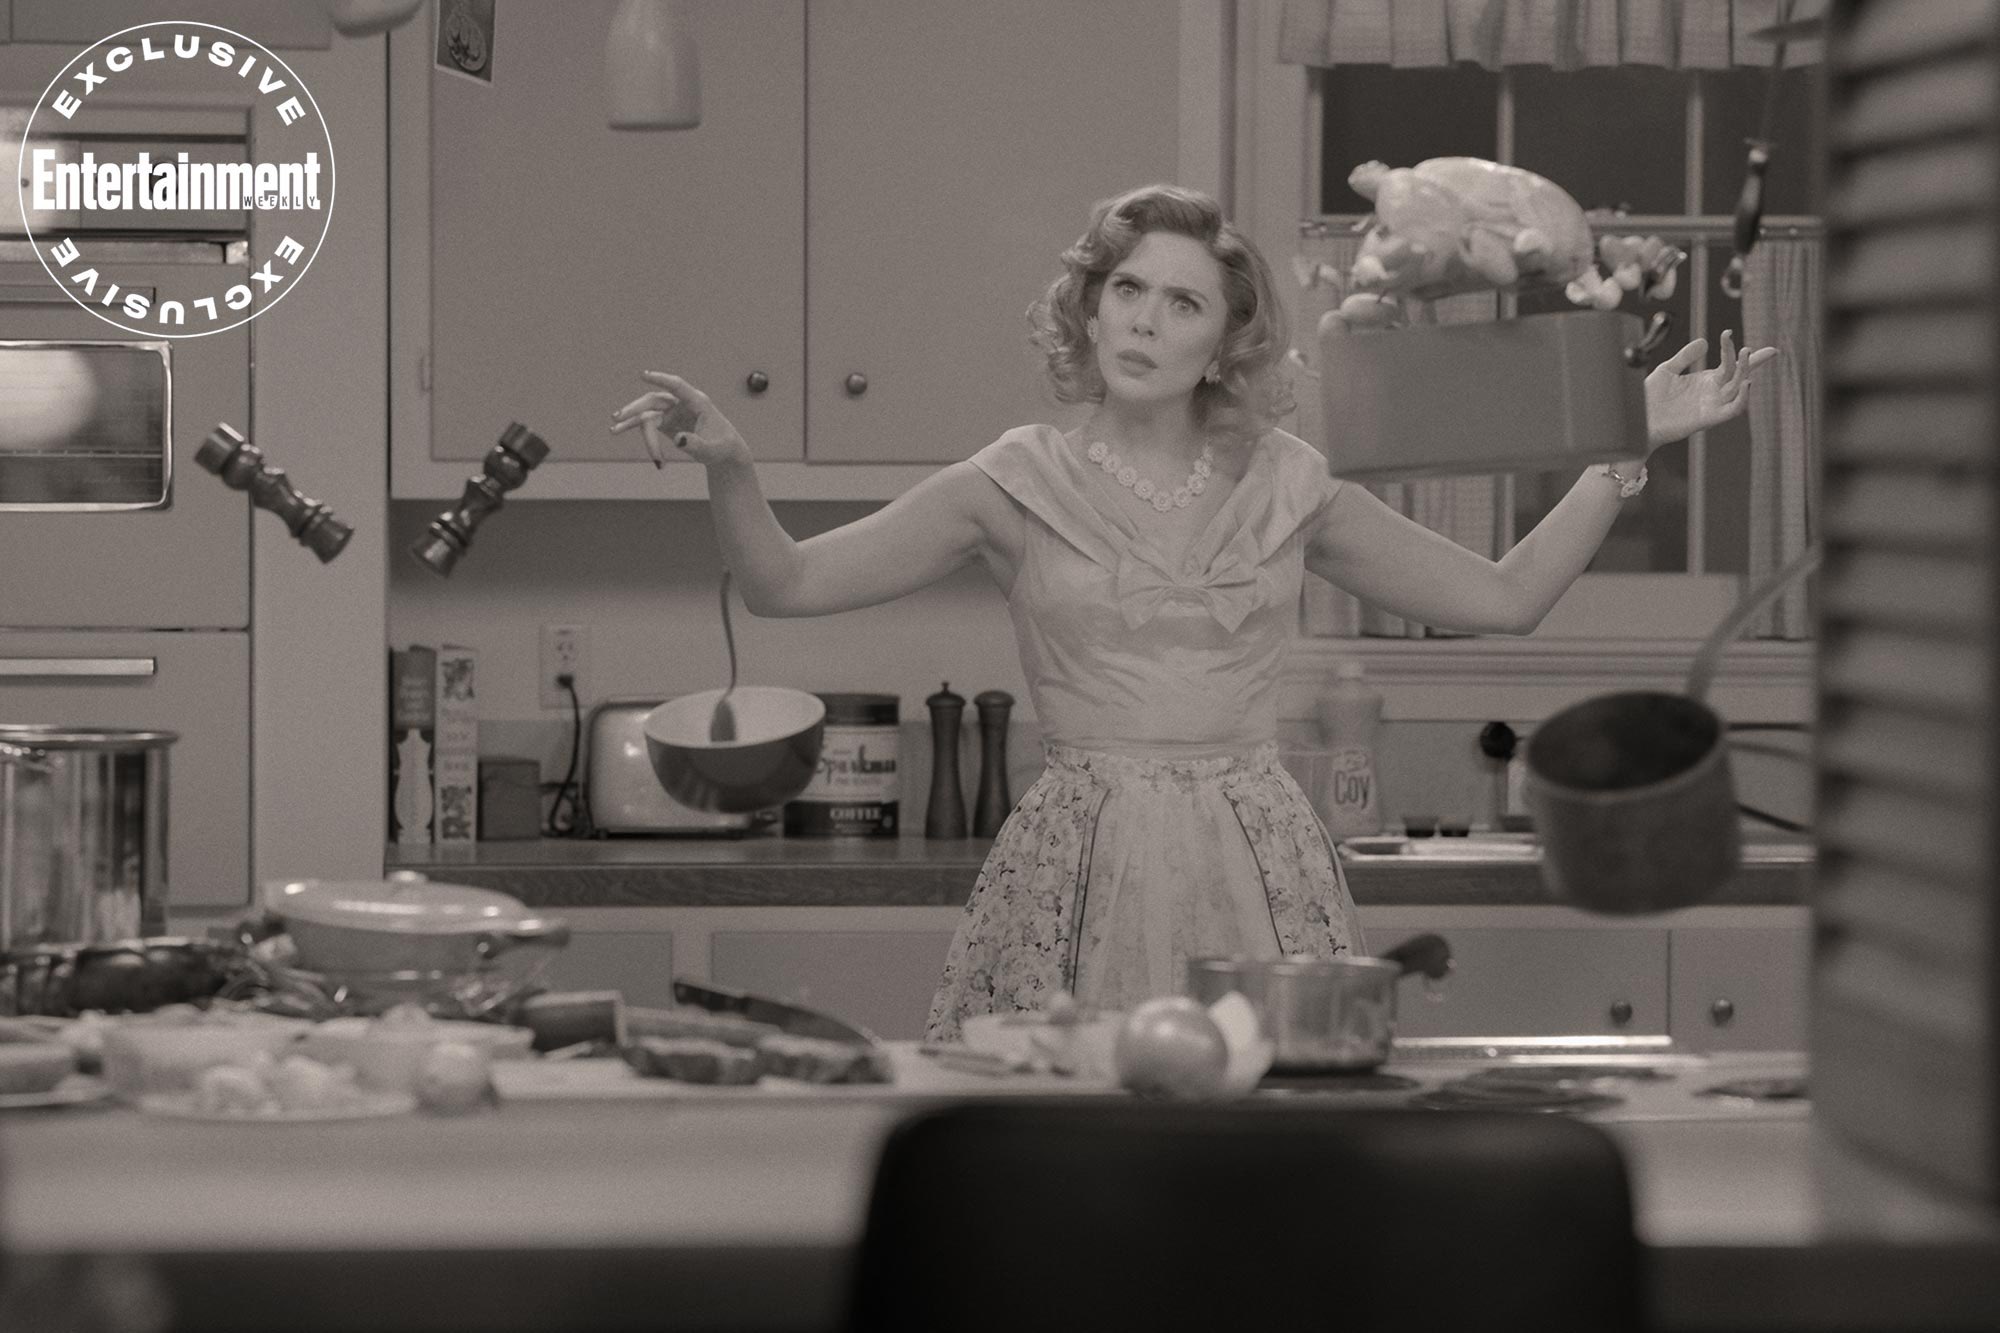 Elizabeth Olsen as Scarlet Witch levitating kitchen utensils